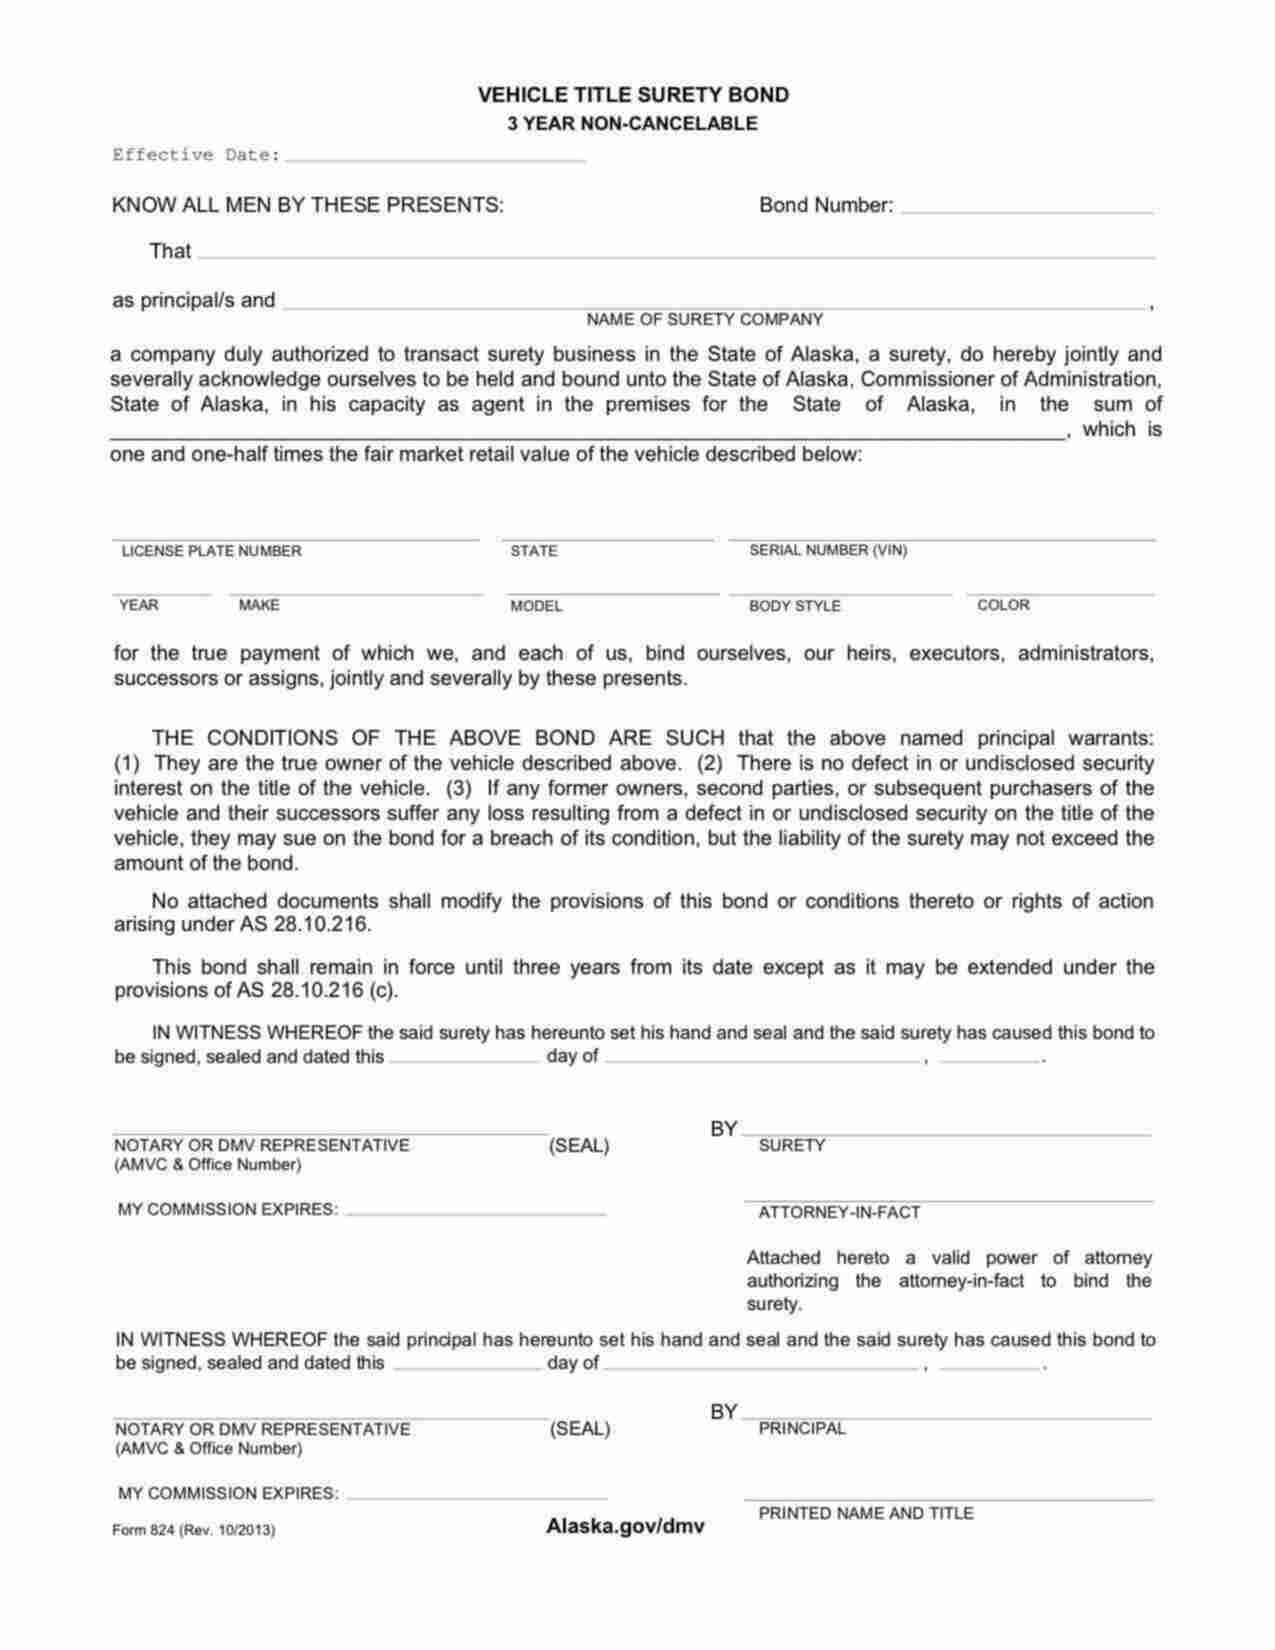 Alaska Motor Vehicle Certificate of Title Bond Form